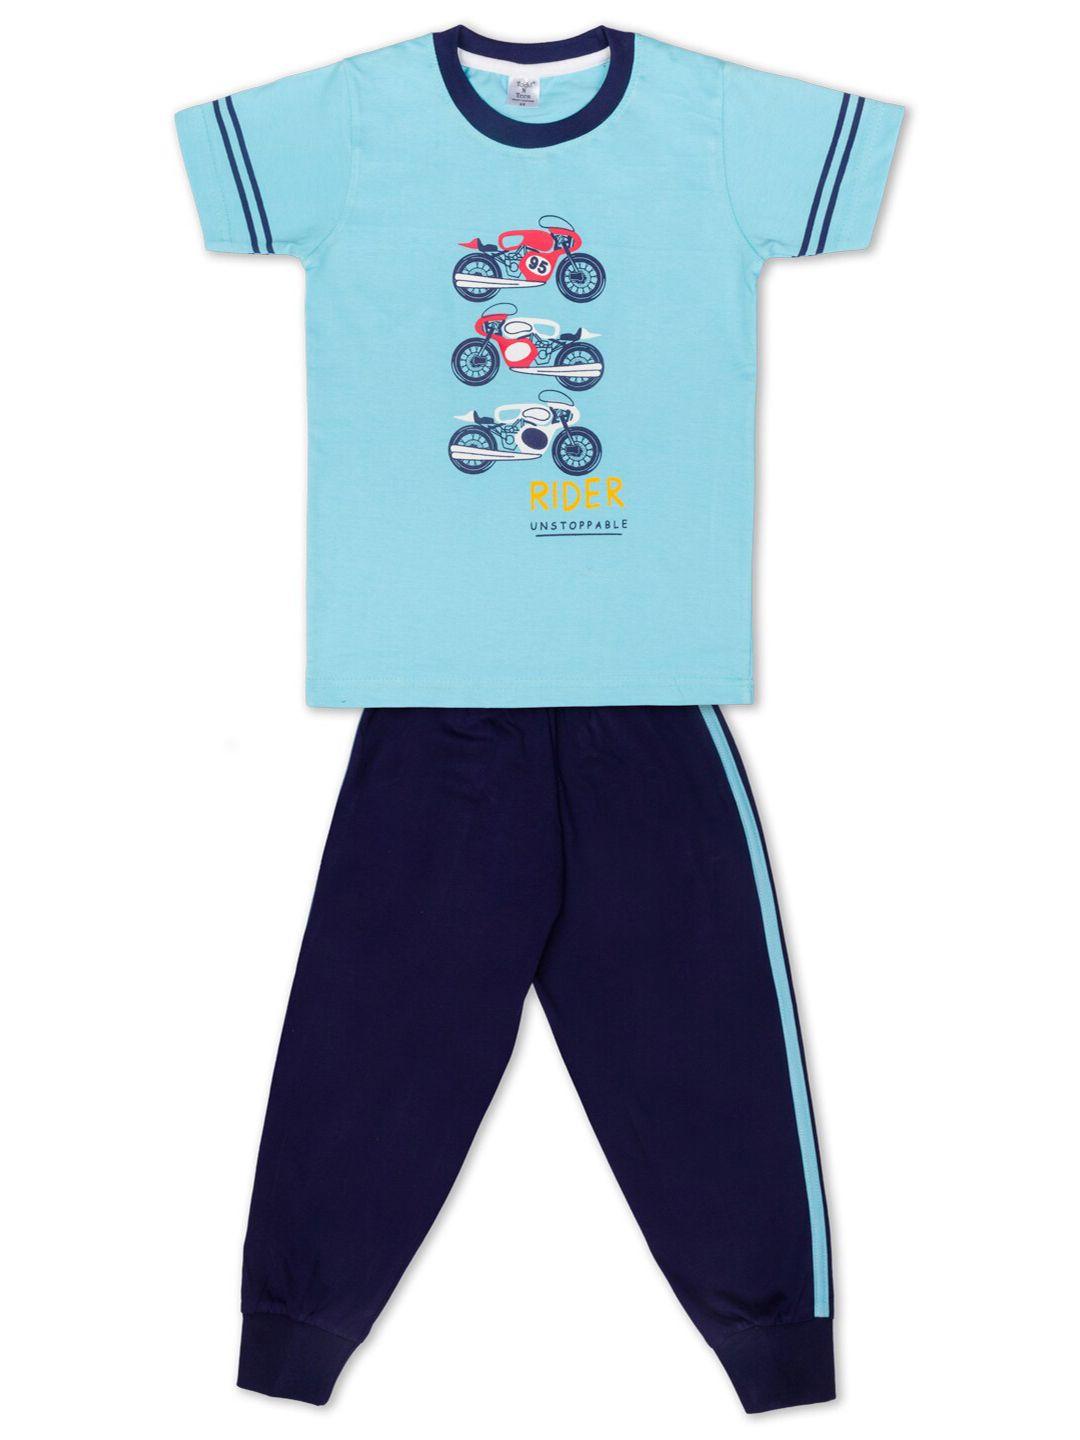 todd n teen boys turquoise blue & navy printed clothing set set